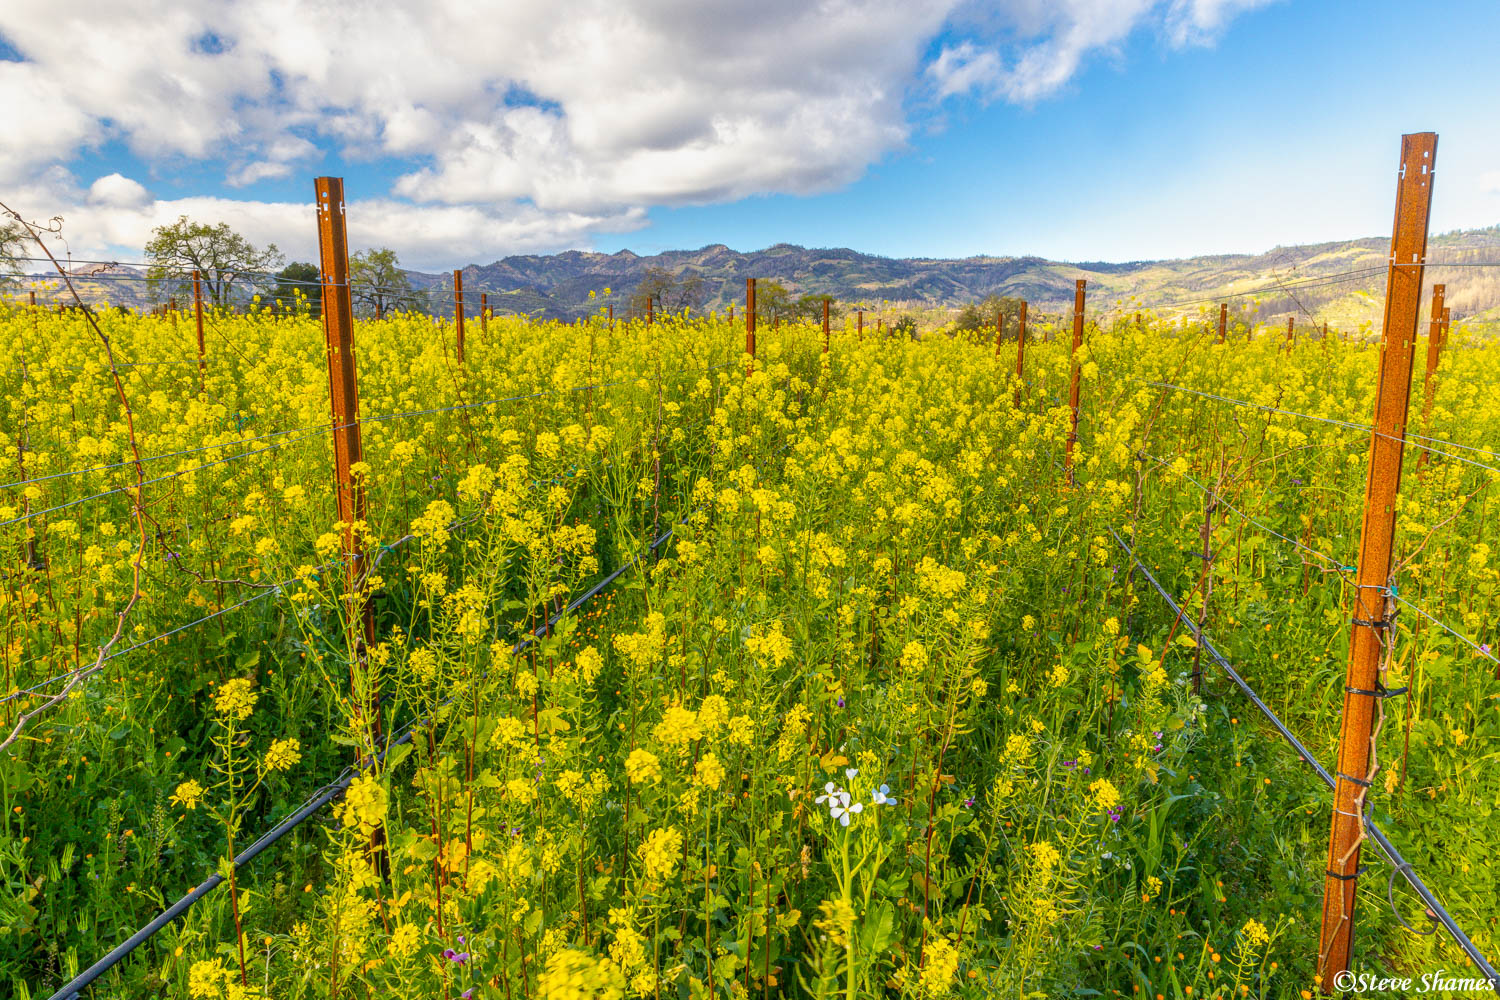 Wild mustard overtaking a vineyard in the Napa Valley.